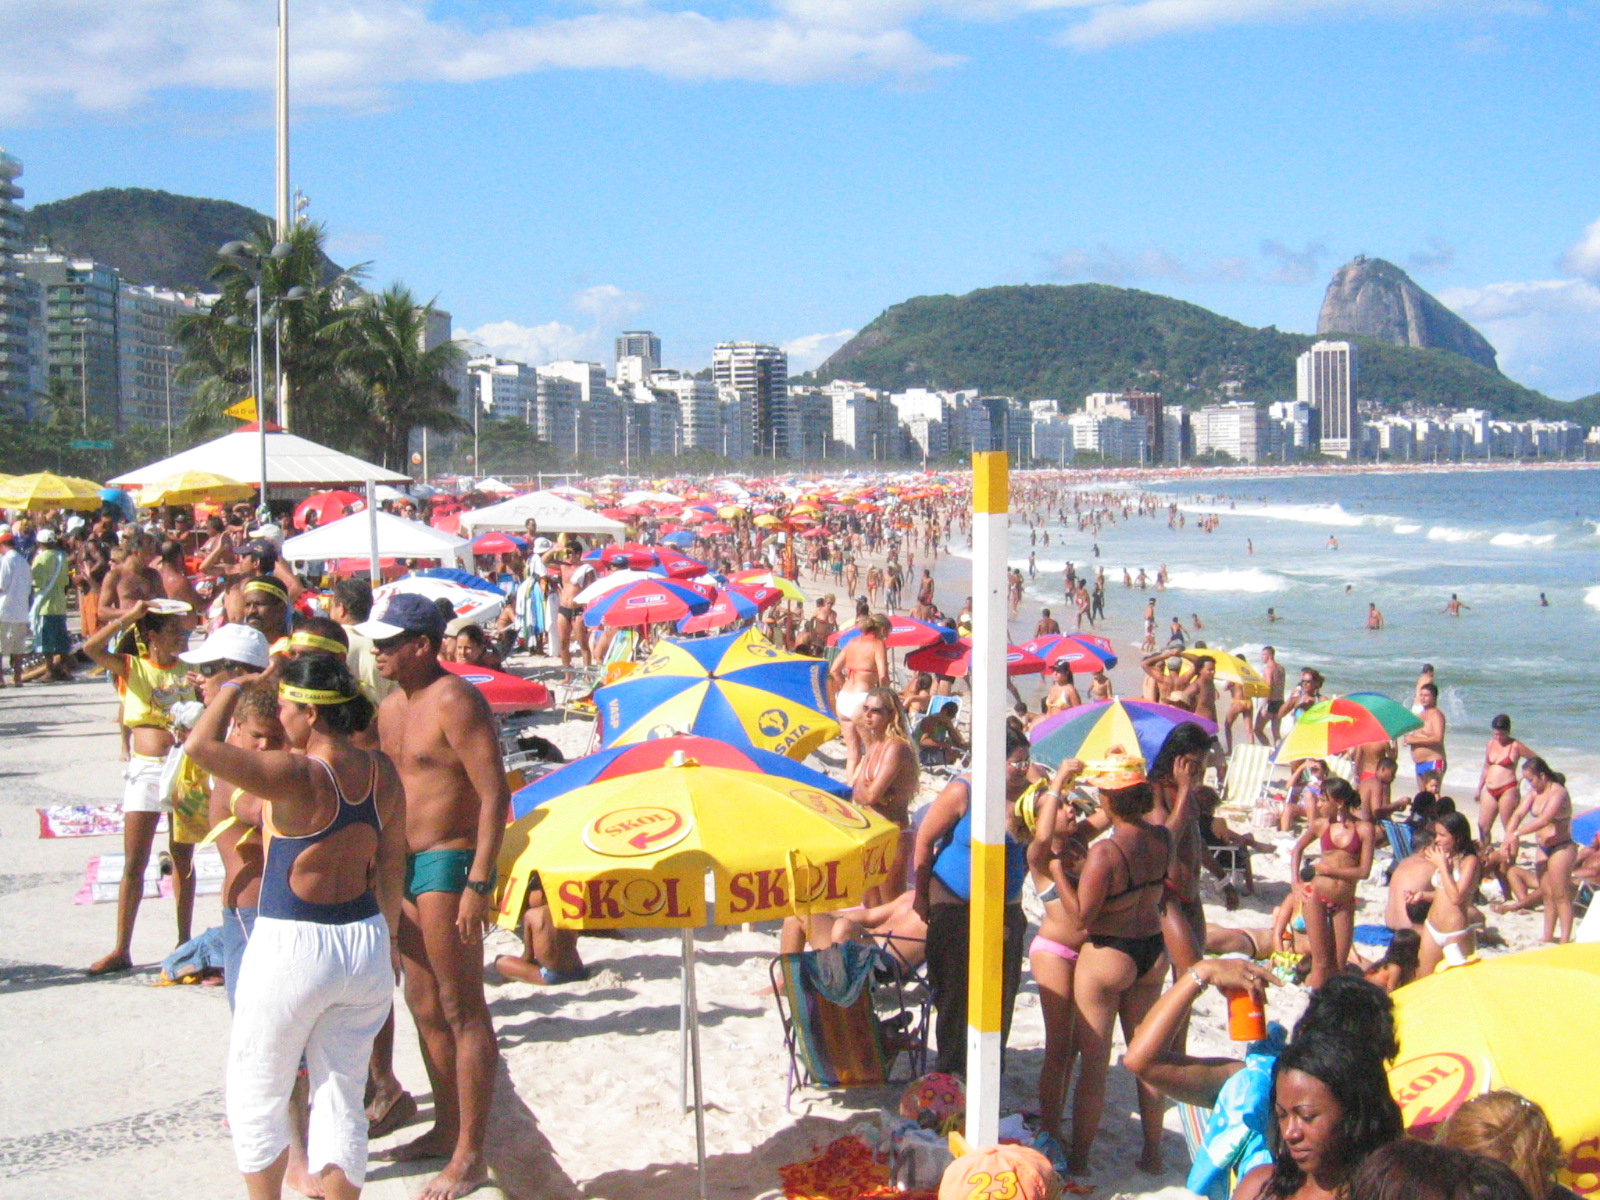 Copacabana Beautiful Beach Babes Hello From The Five Star Vagabond